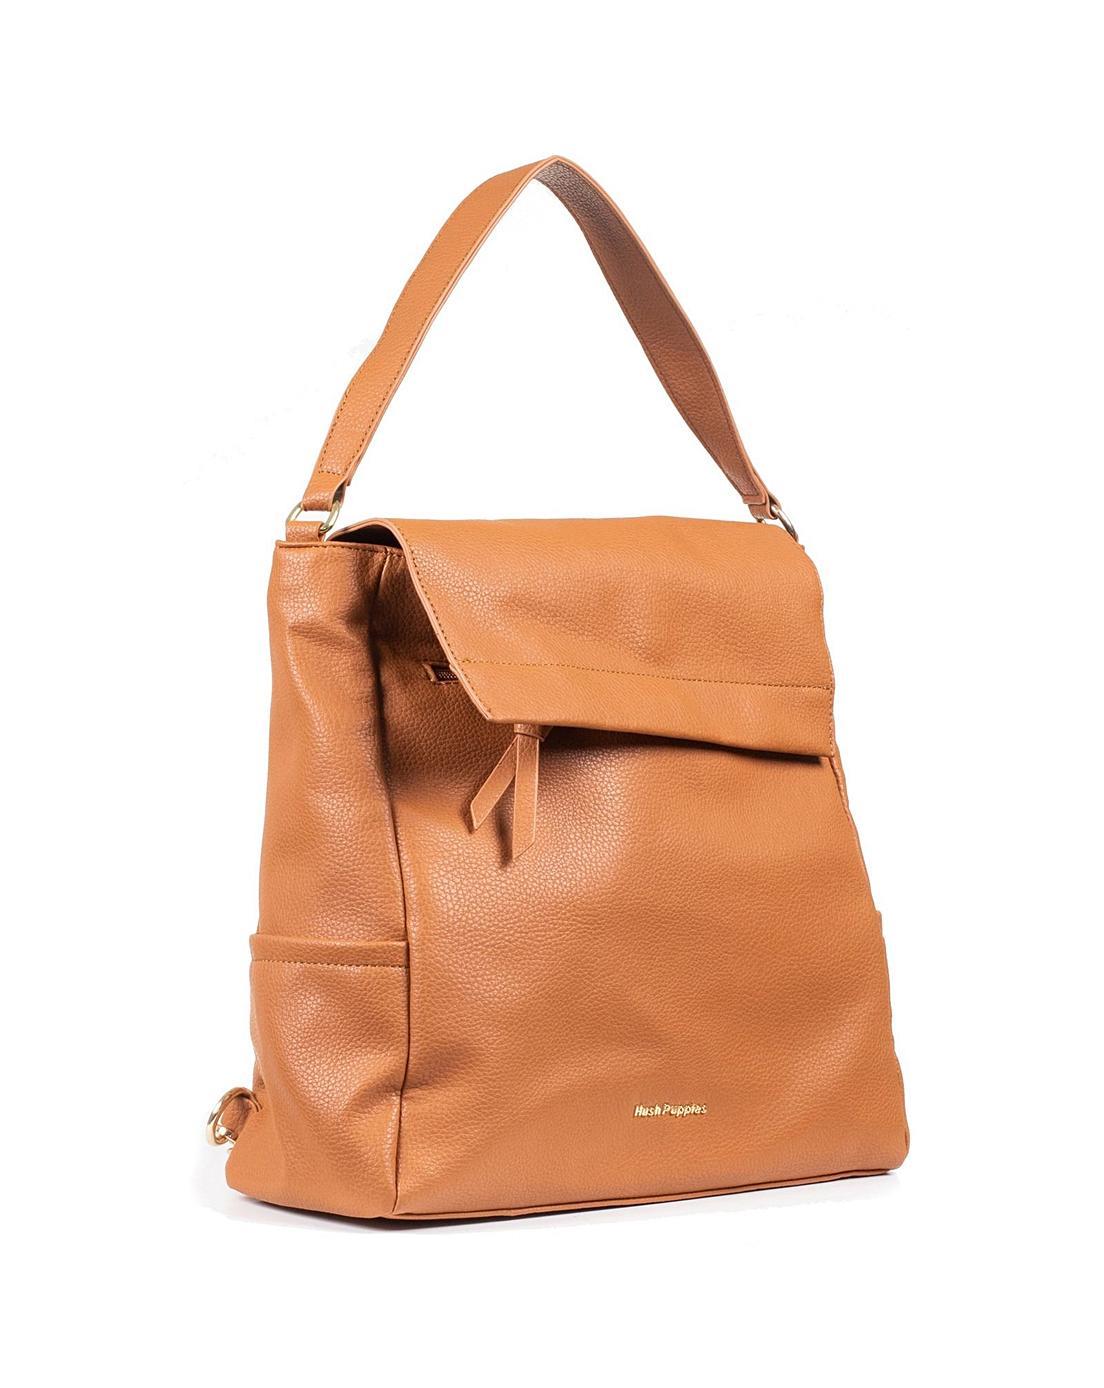 Hush Puppies Chelsea amber PU faux leather backpack women's handbag